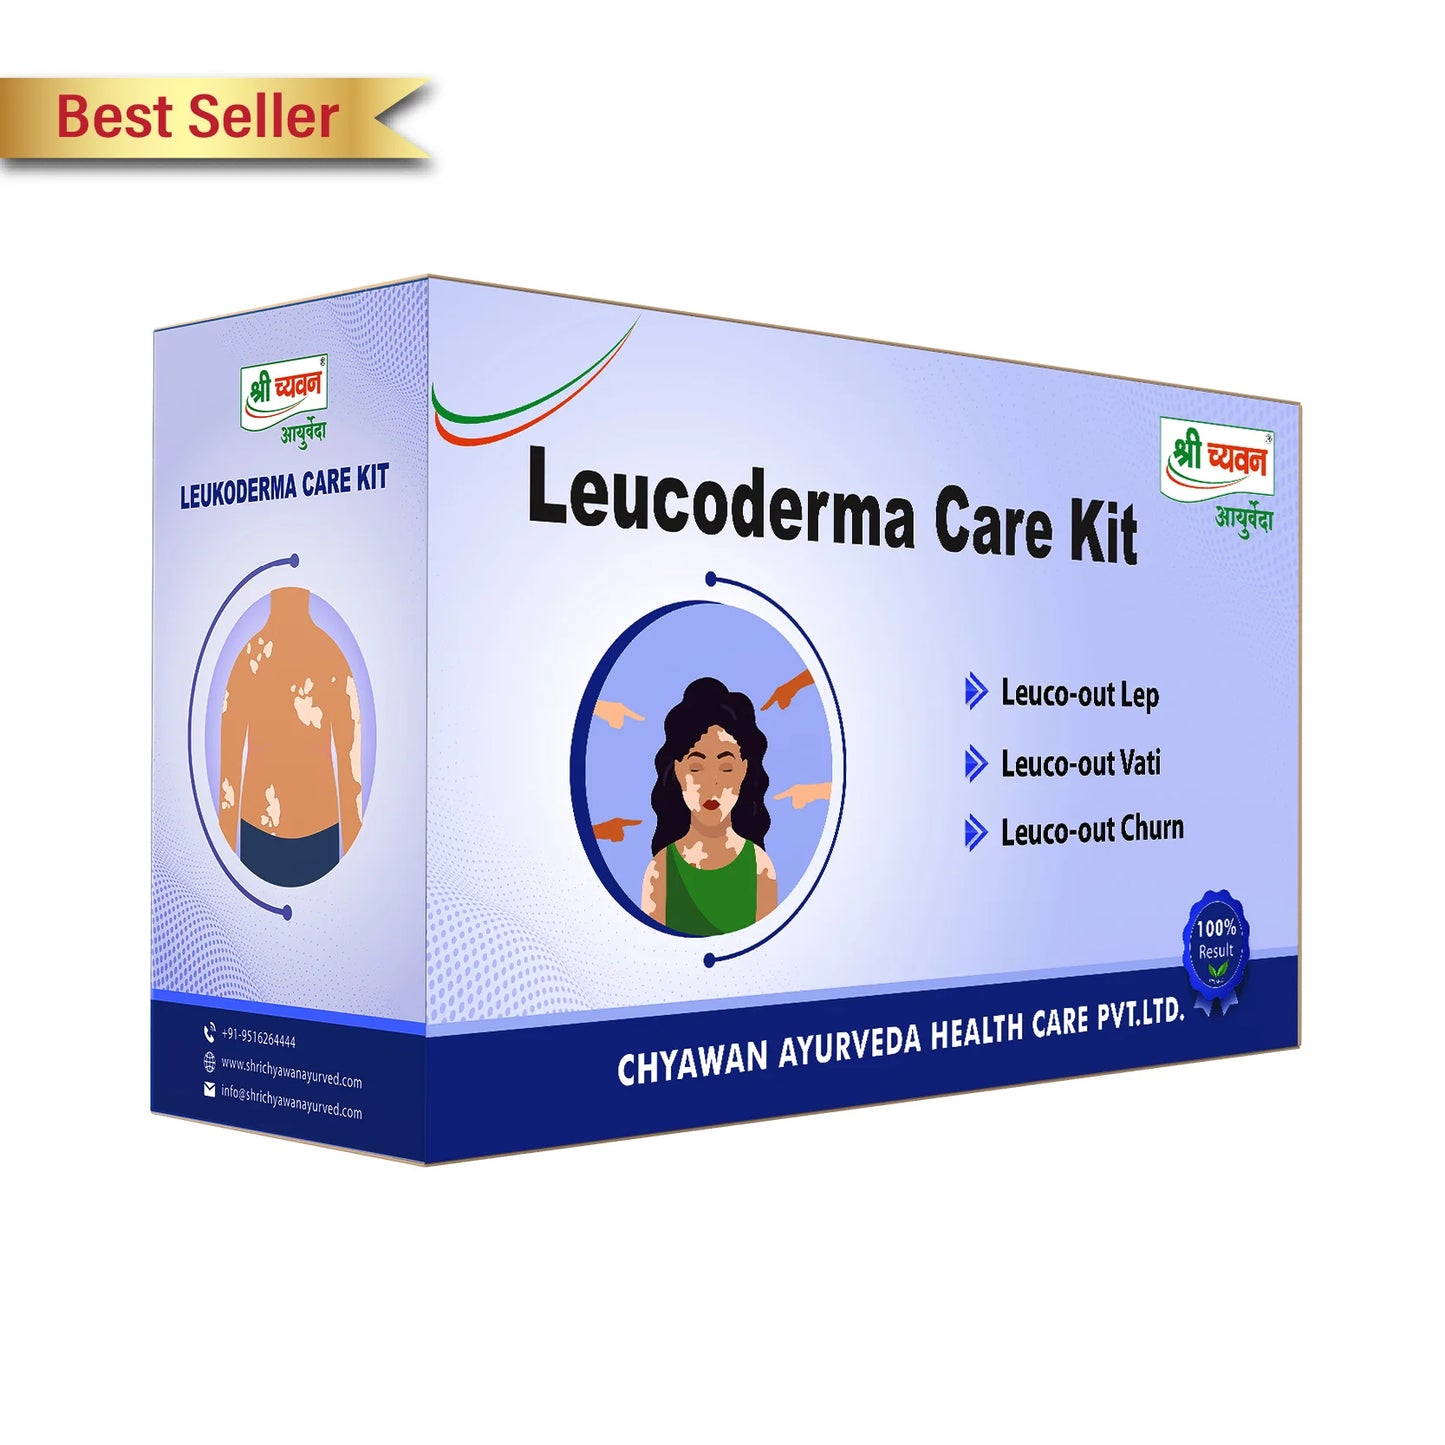 Leuco derma care kit for Vitiligo care